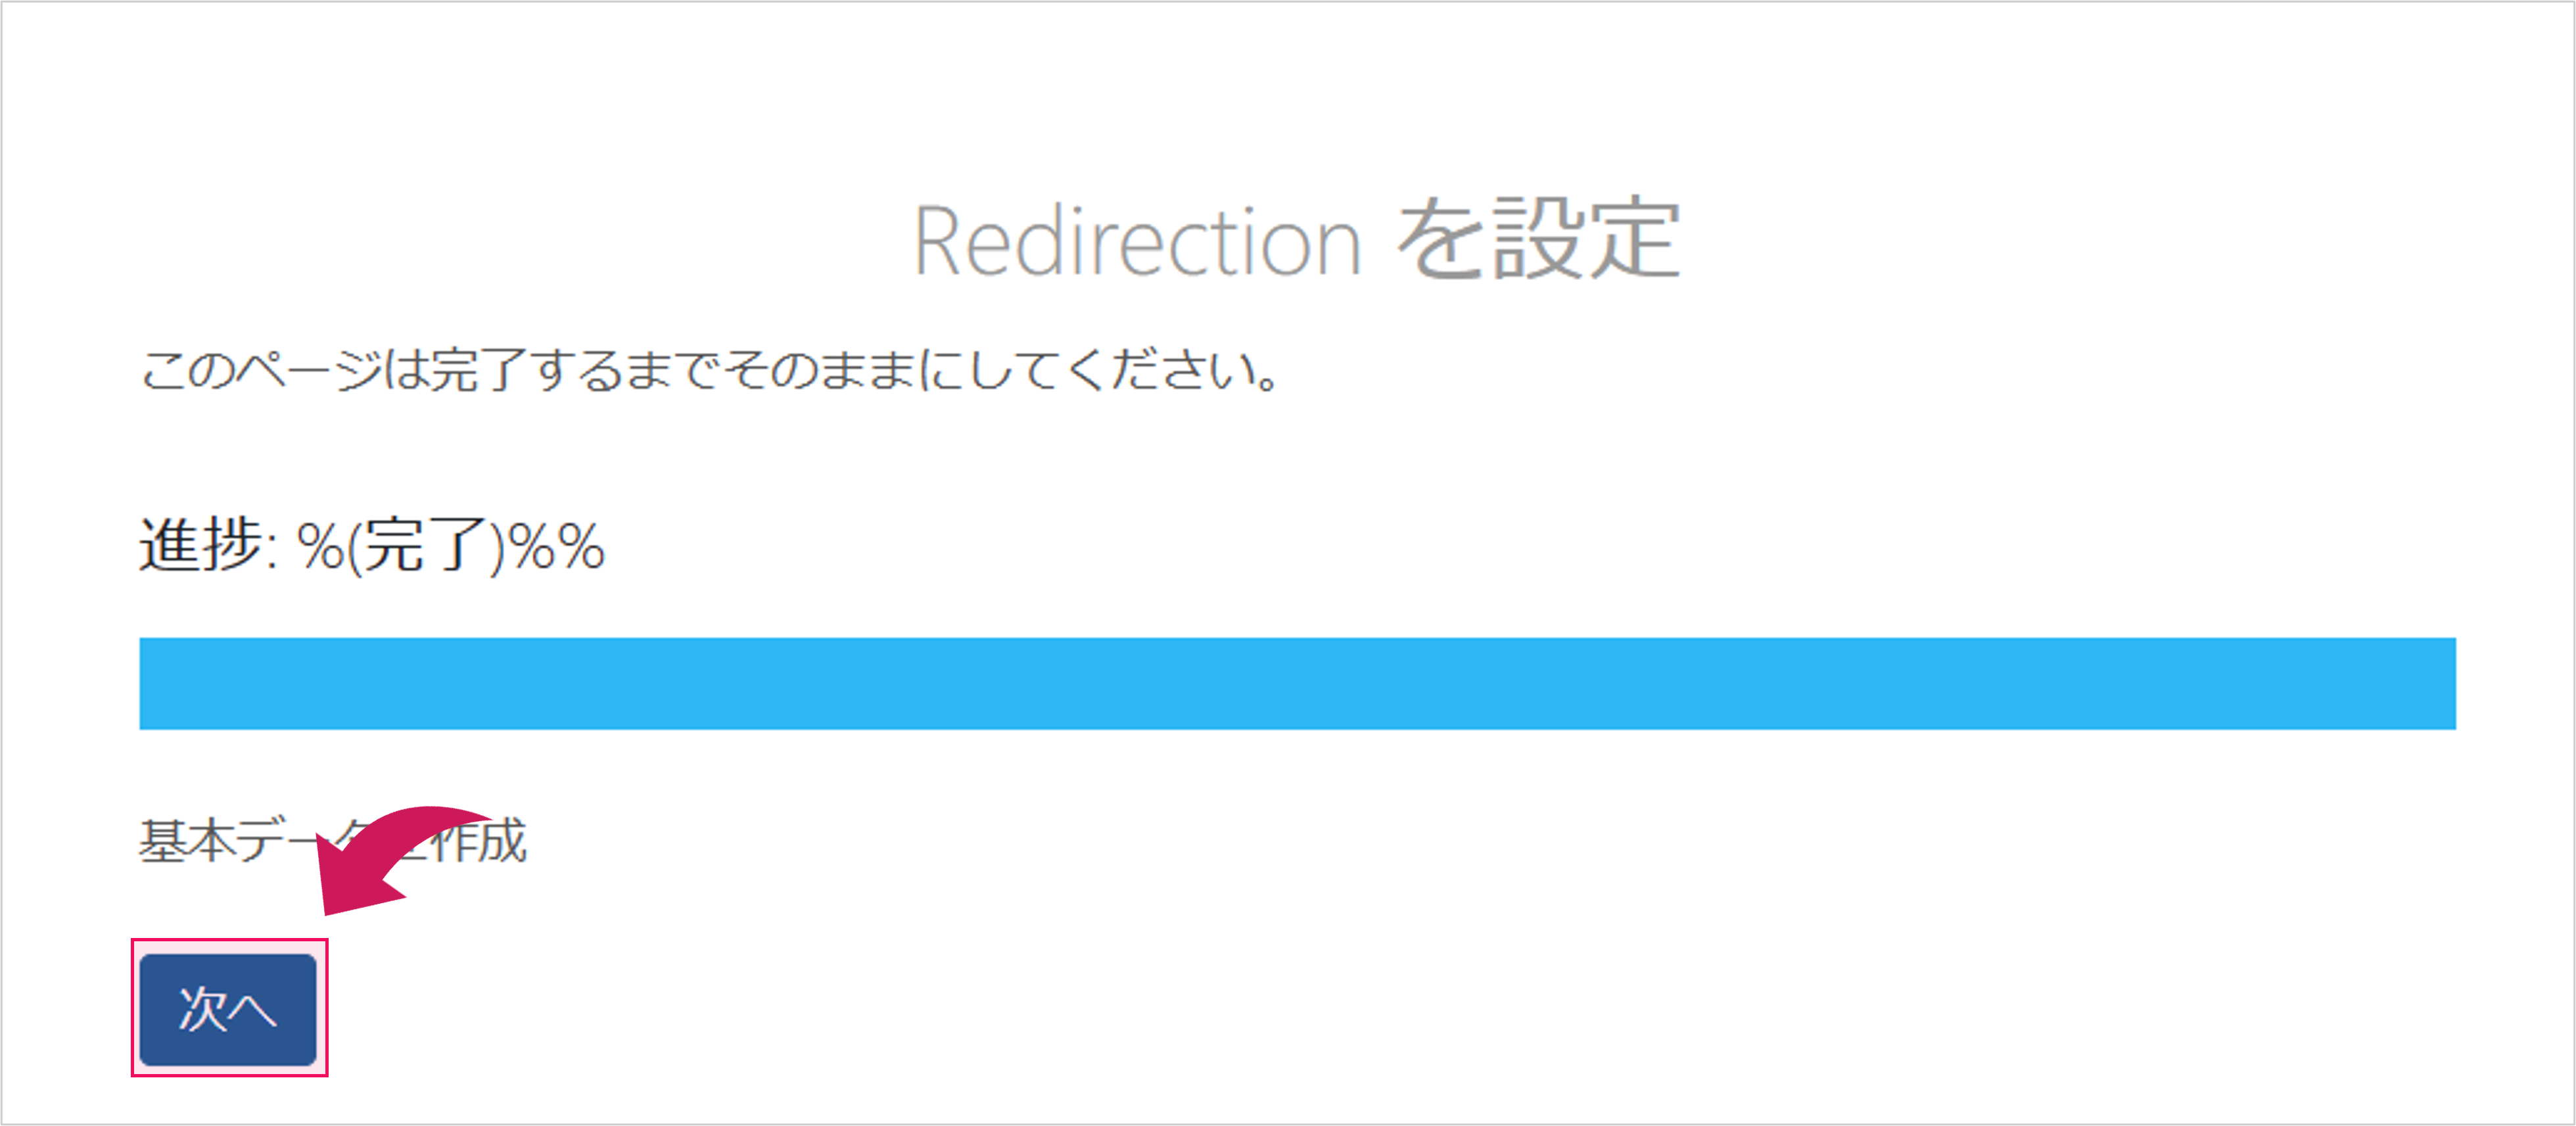 Redirection-セットアップ